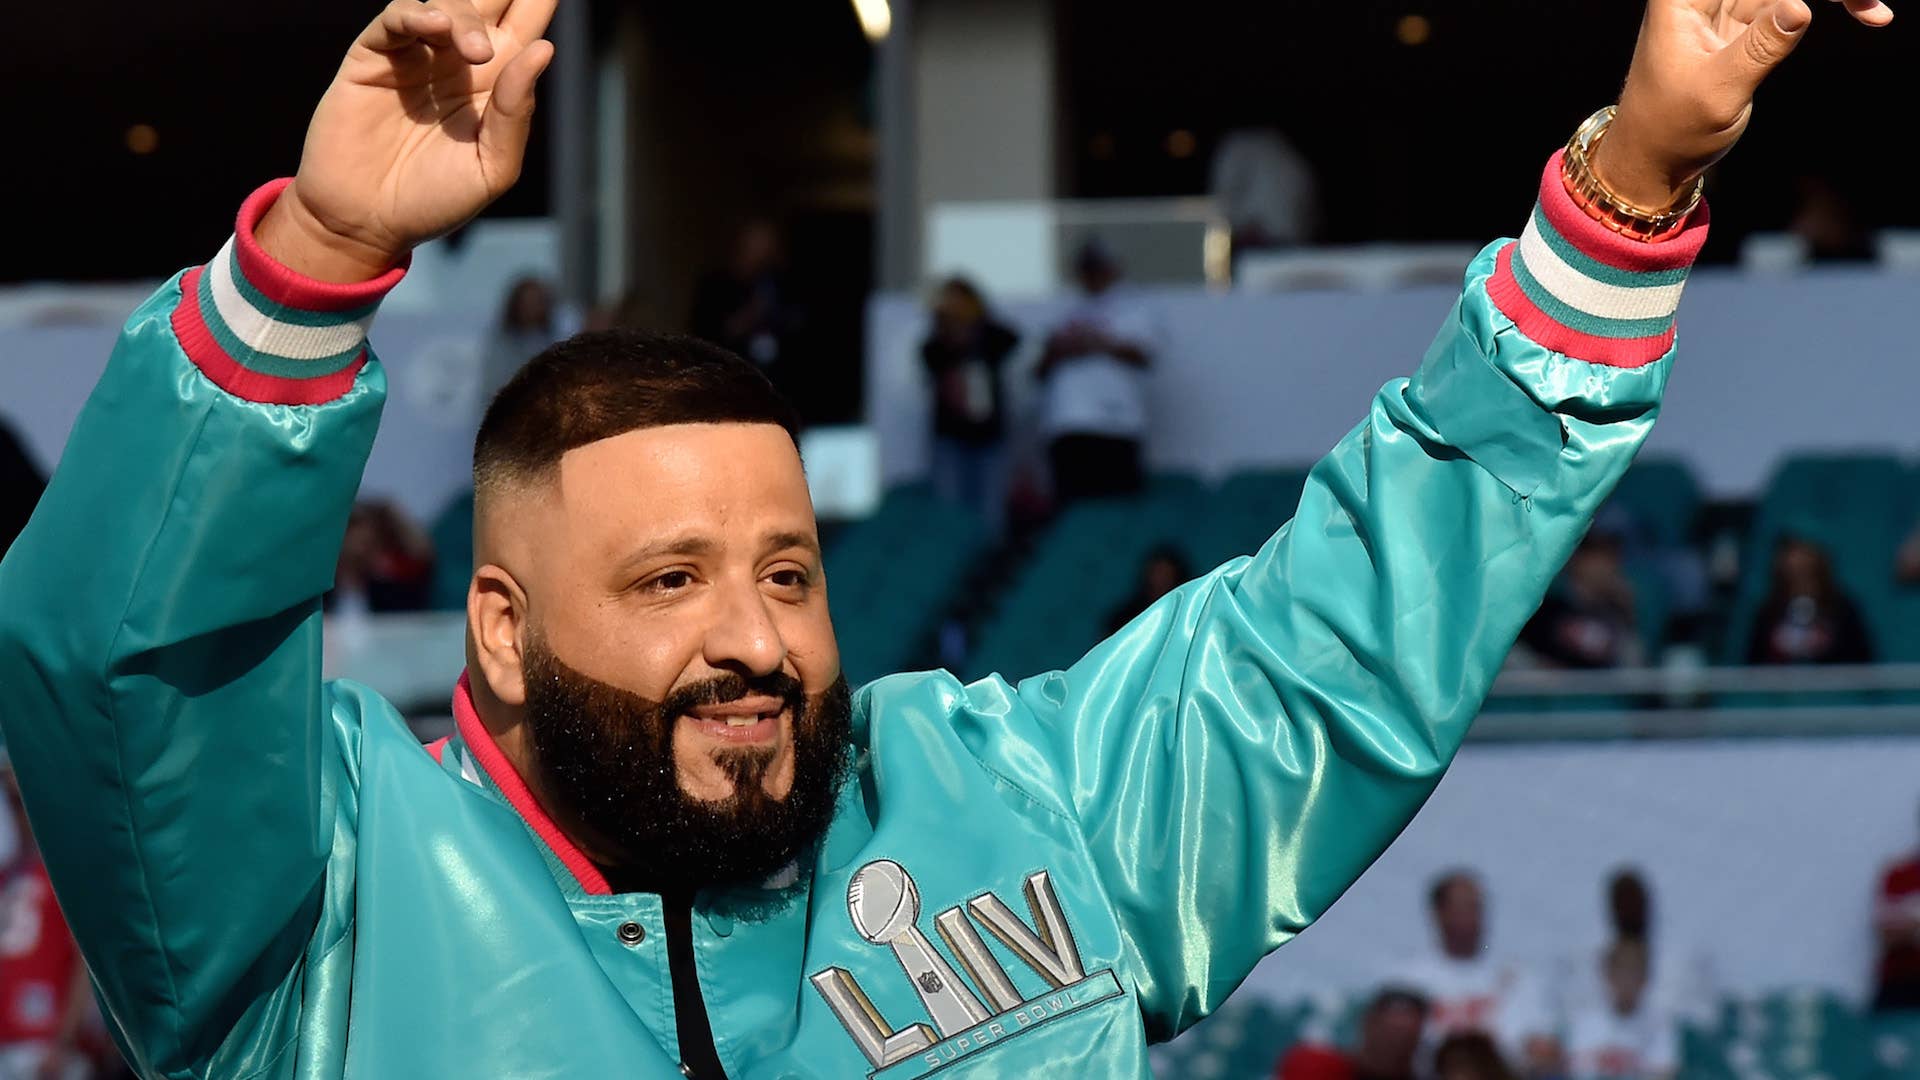 DJ Khaled attends Super Bowl LIV at Hard Rock Stadium